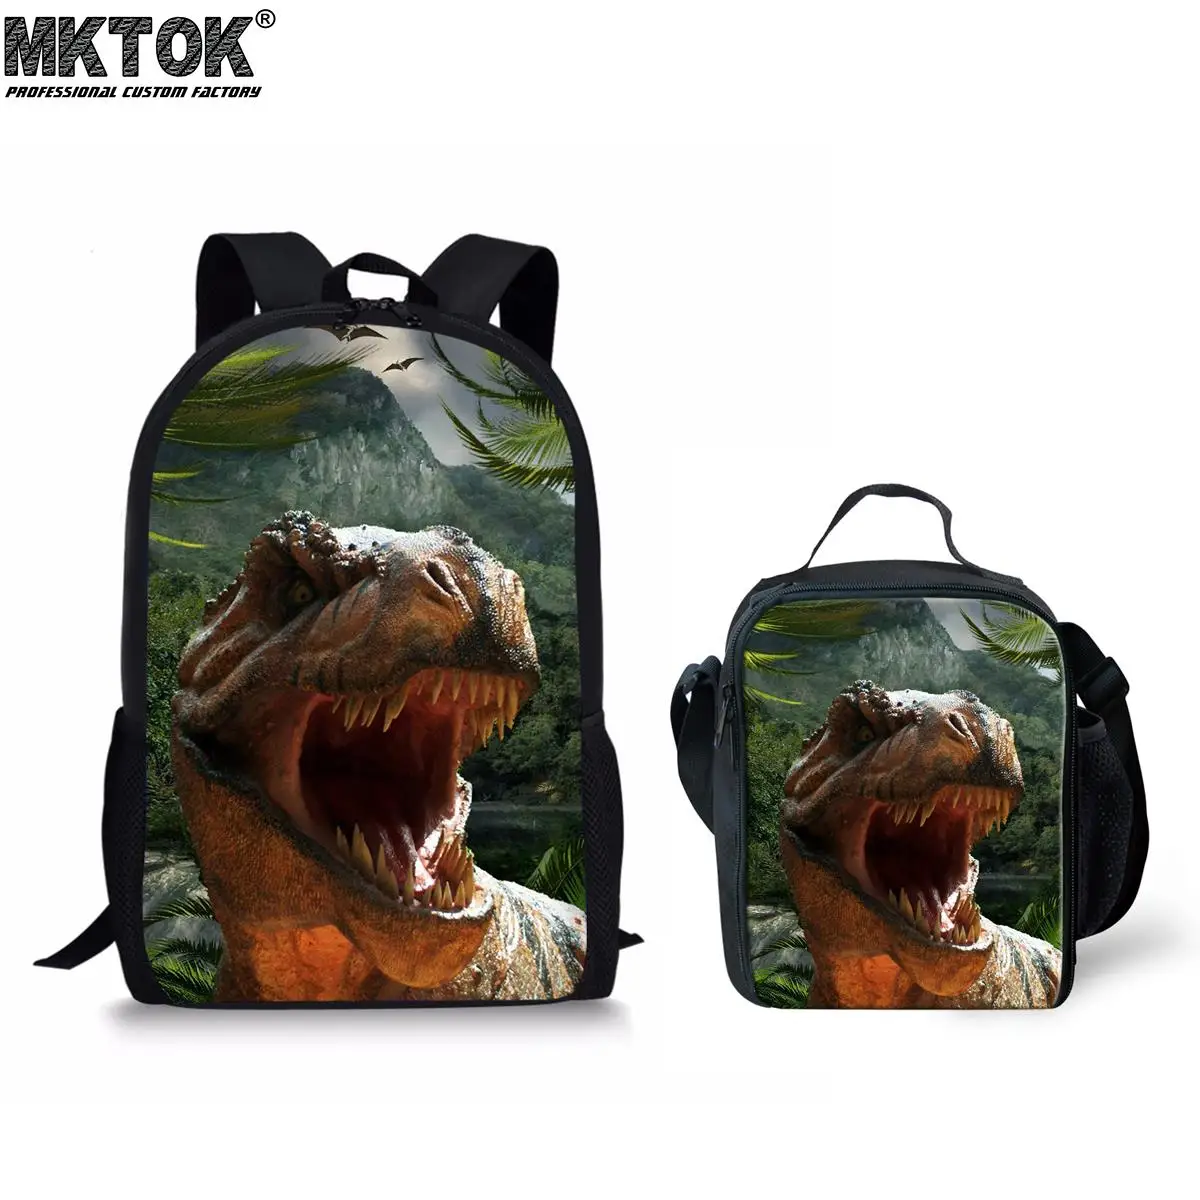 Ferocious Dinosaur Design Boys School Bags Set Cool Students Mochila 2pcs Customize Children Backpacks Free Shipping